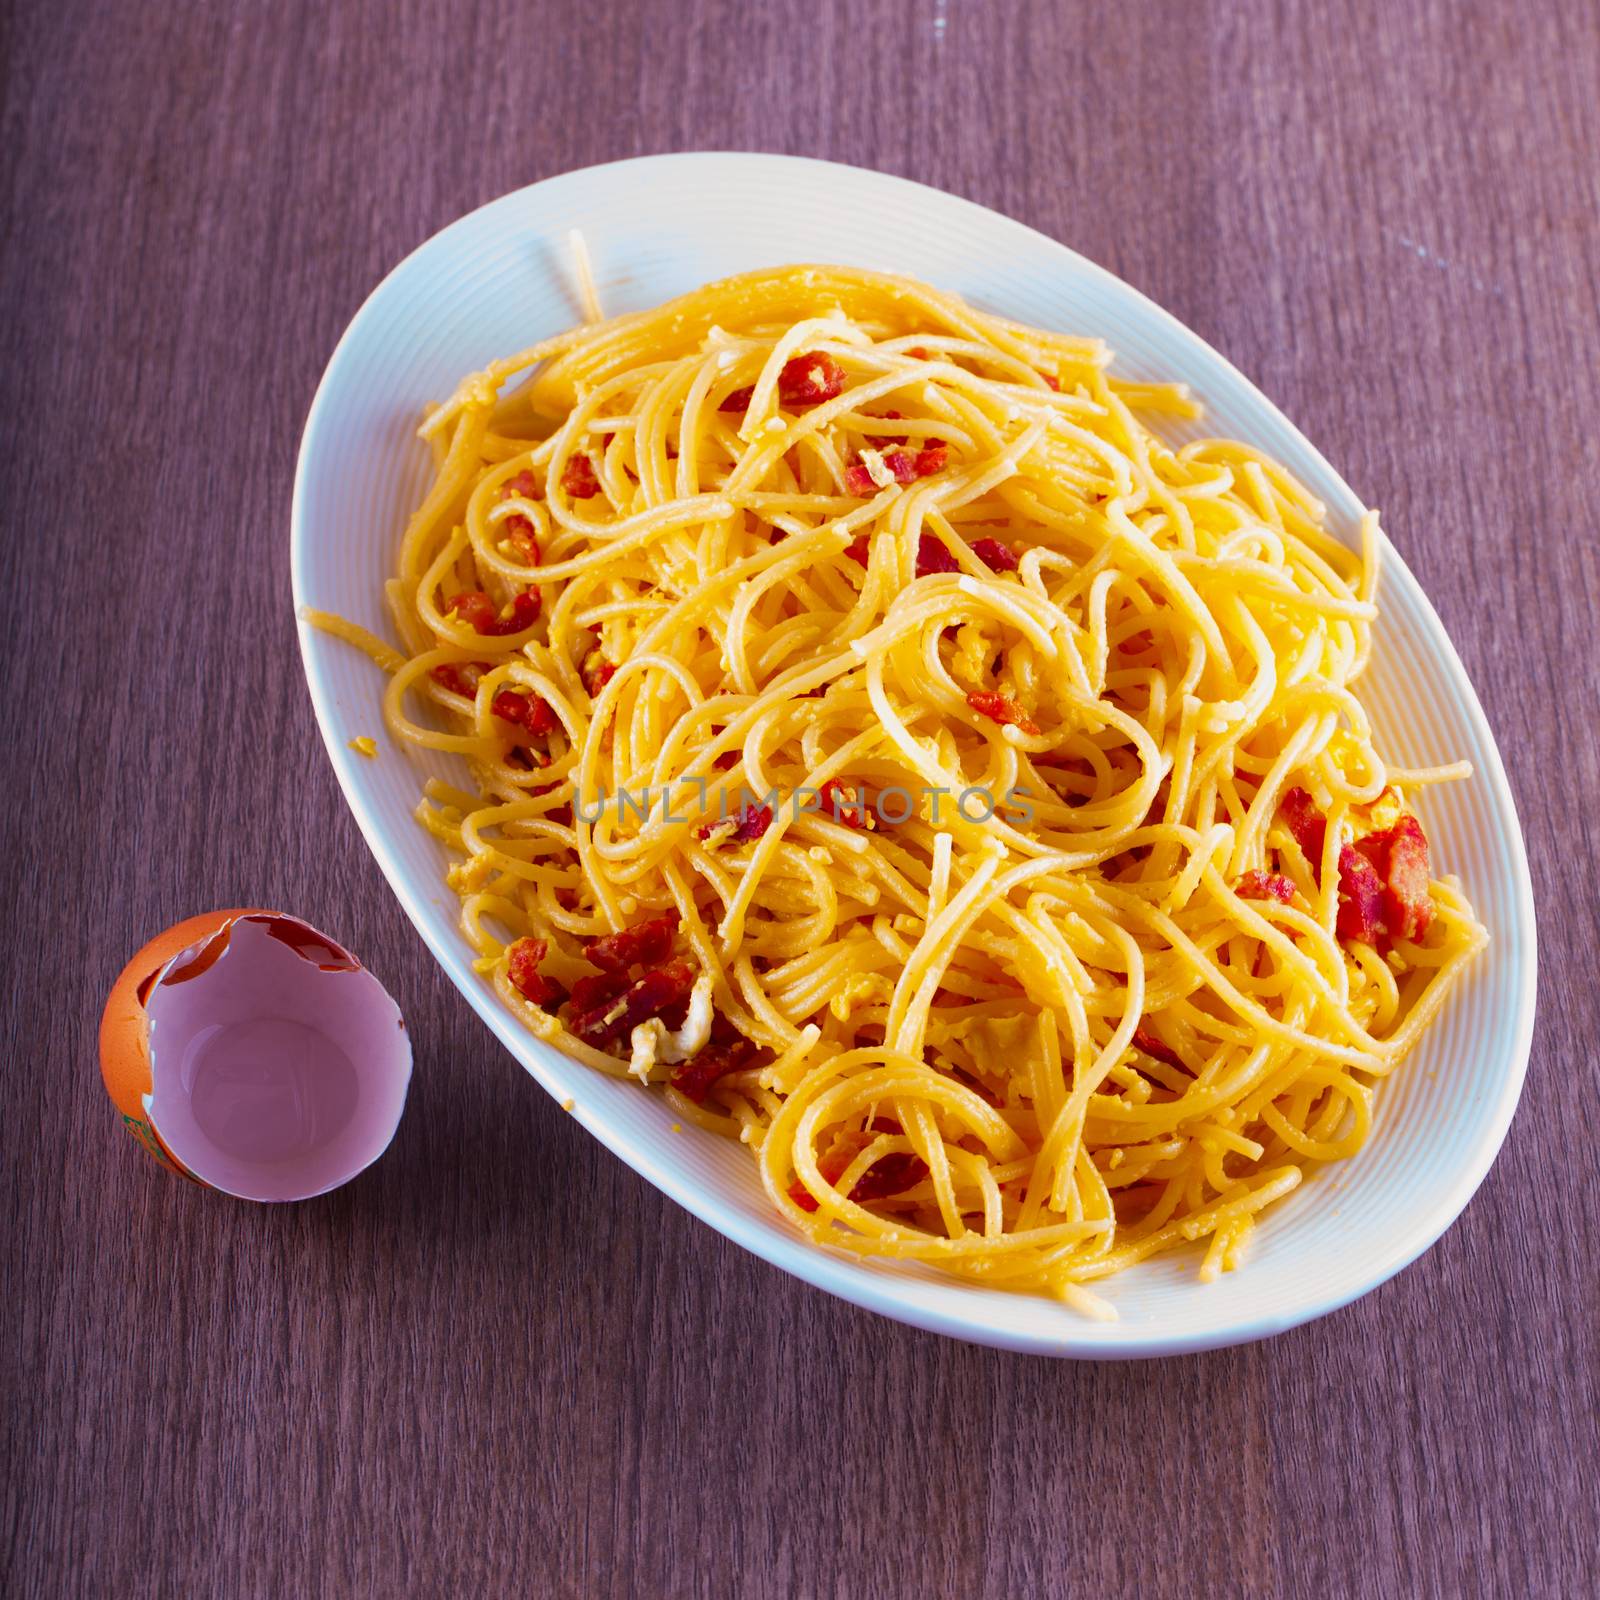 Spaghetti alla carbonara in white plate, with eggshell